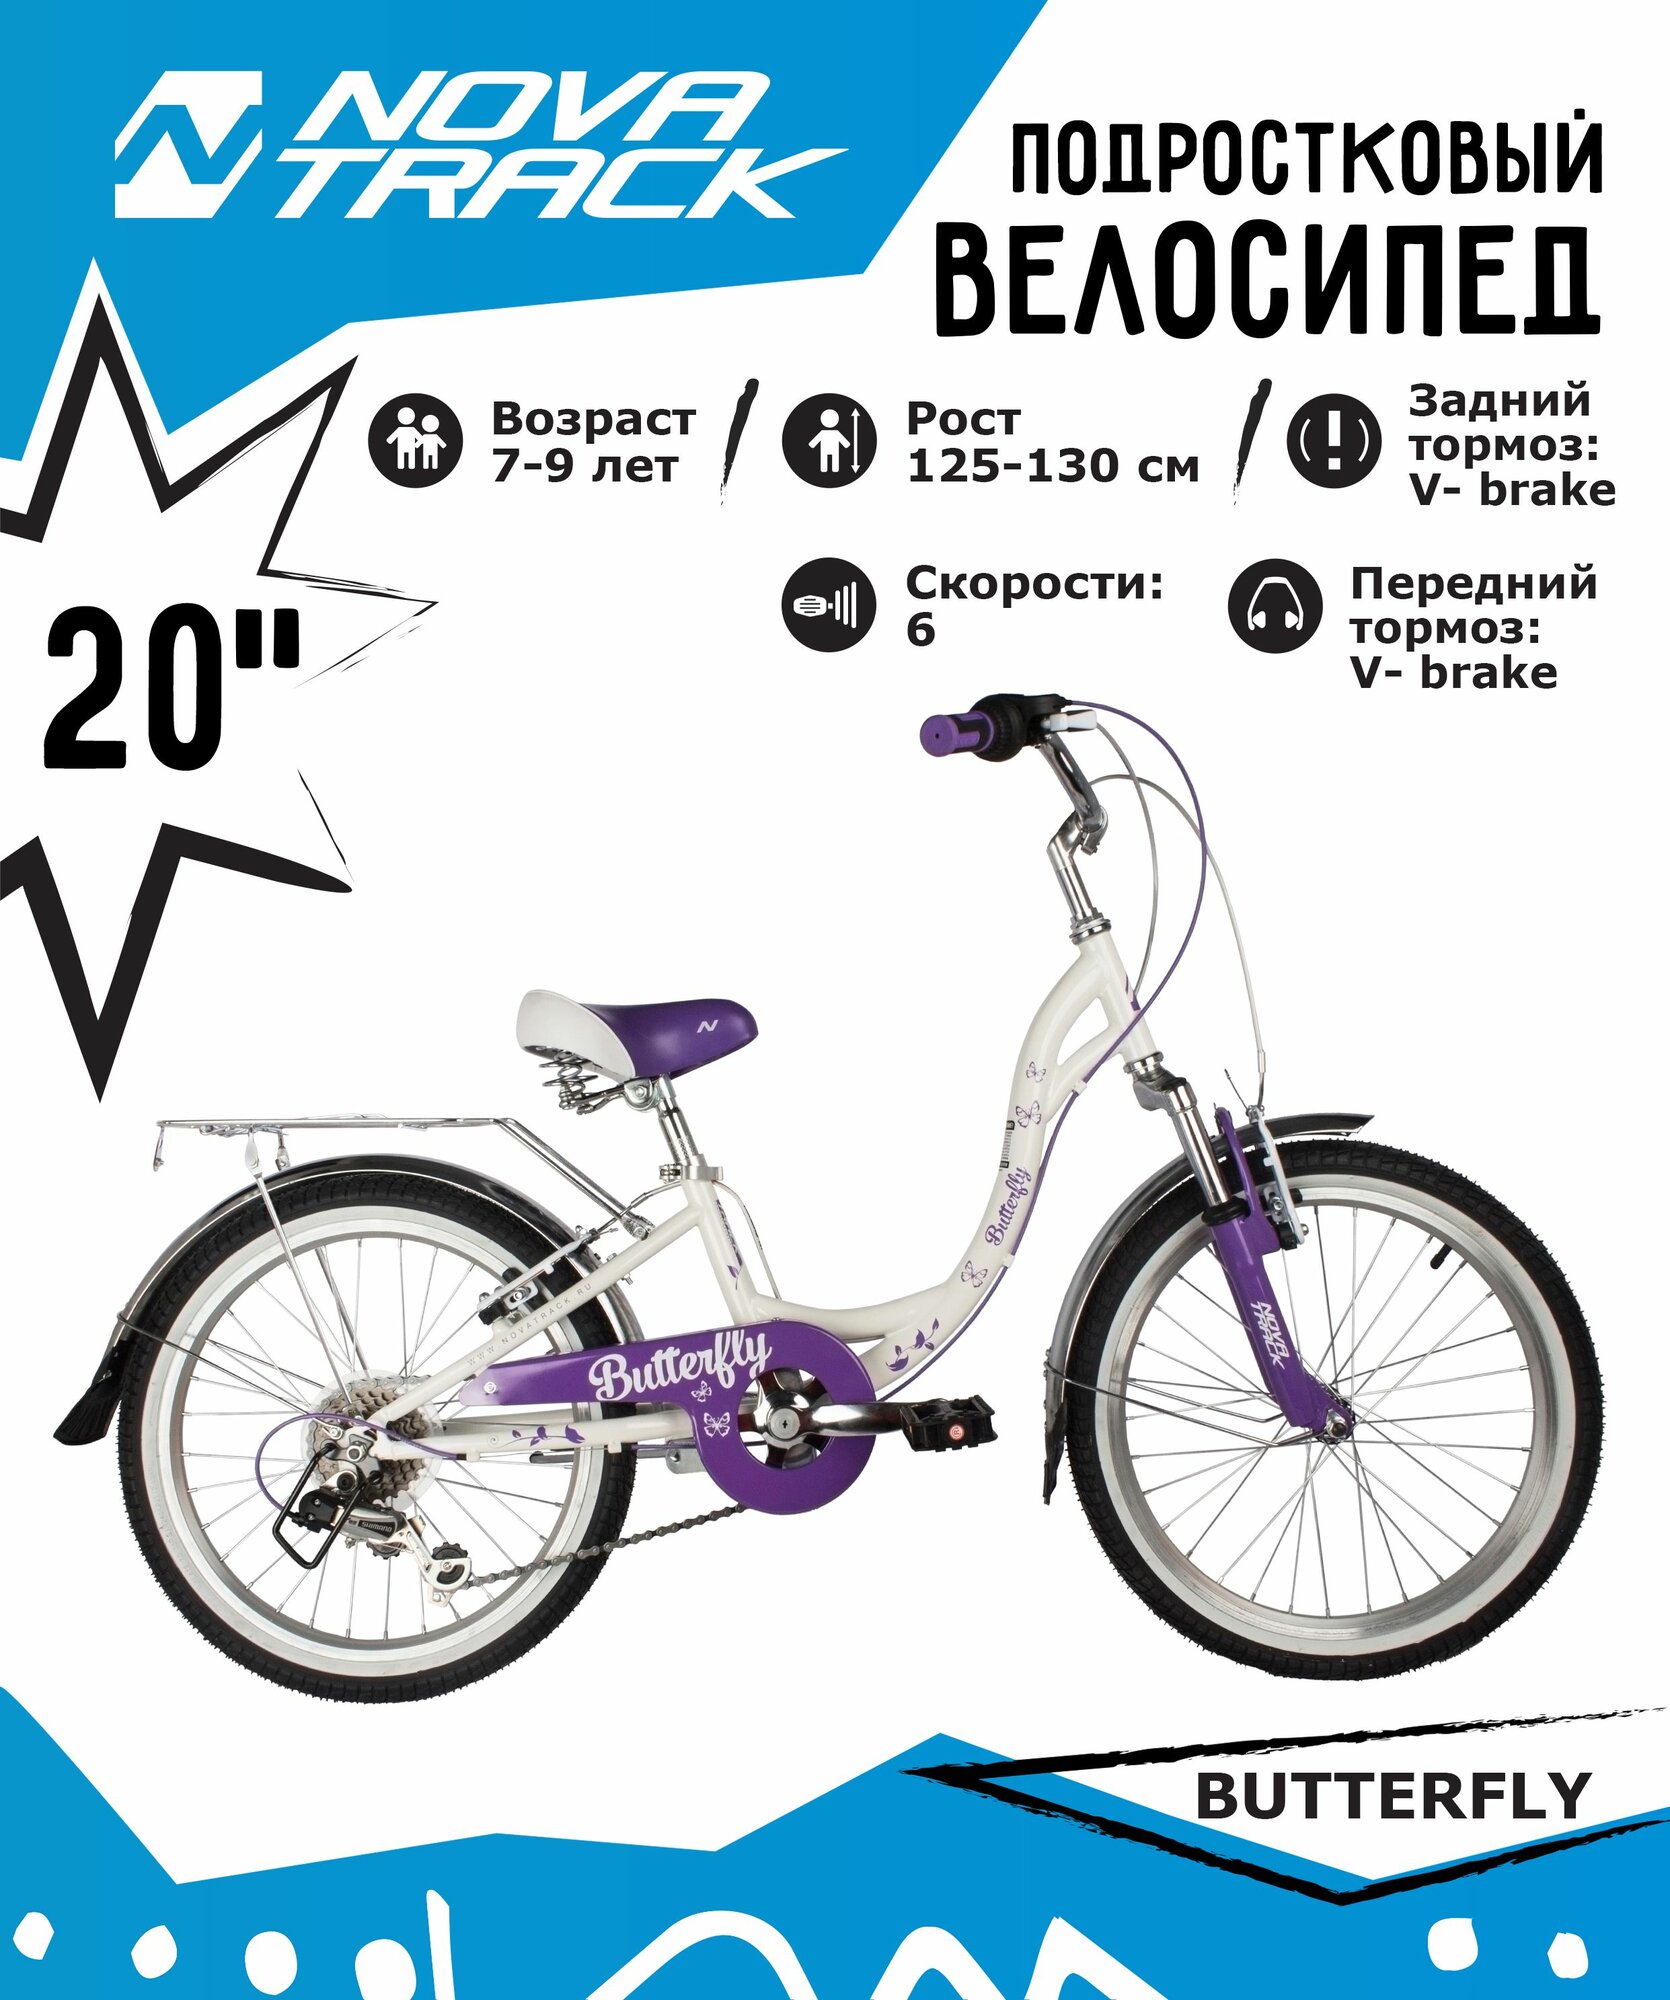 Велосипед NOVATRACK 20" BUTTERFLY сталь, белый-фиолет, 6-скор, TY21/RS35/SG-6SI, V-brake, багажник